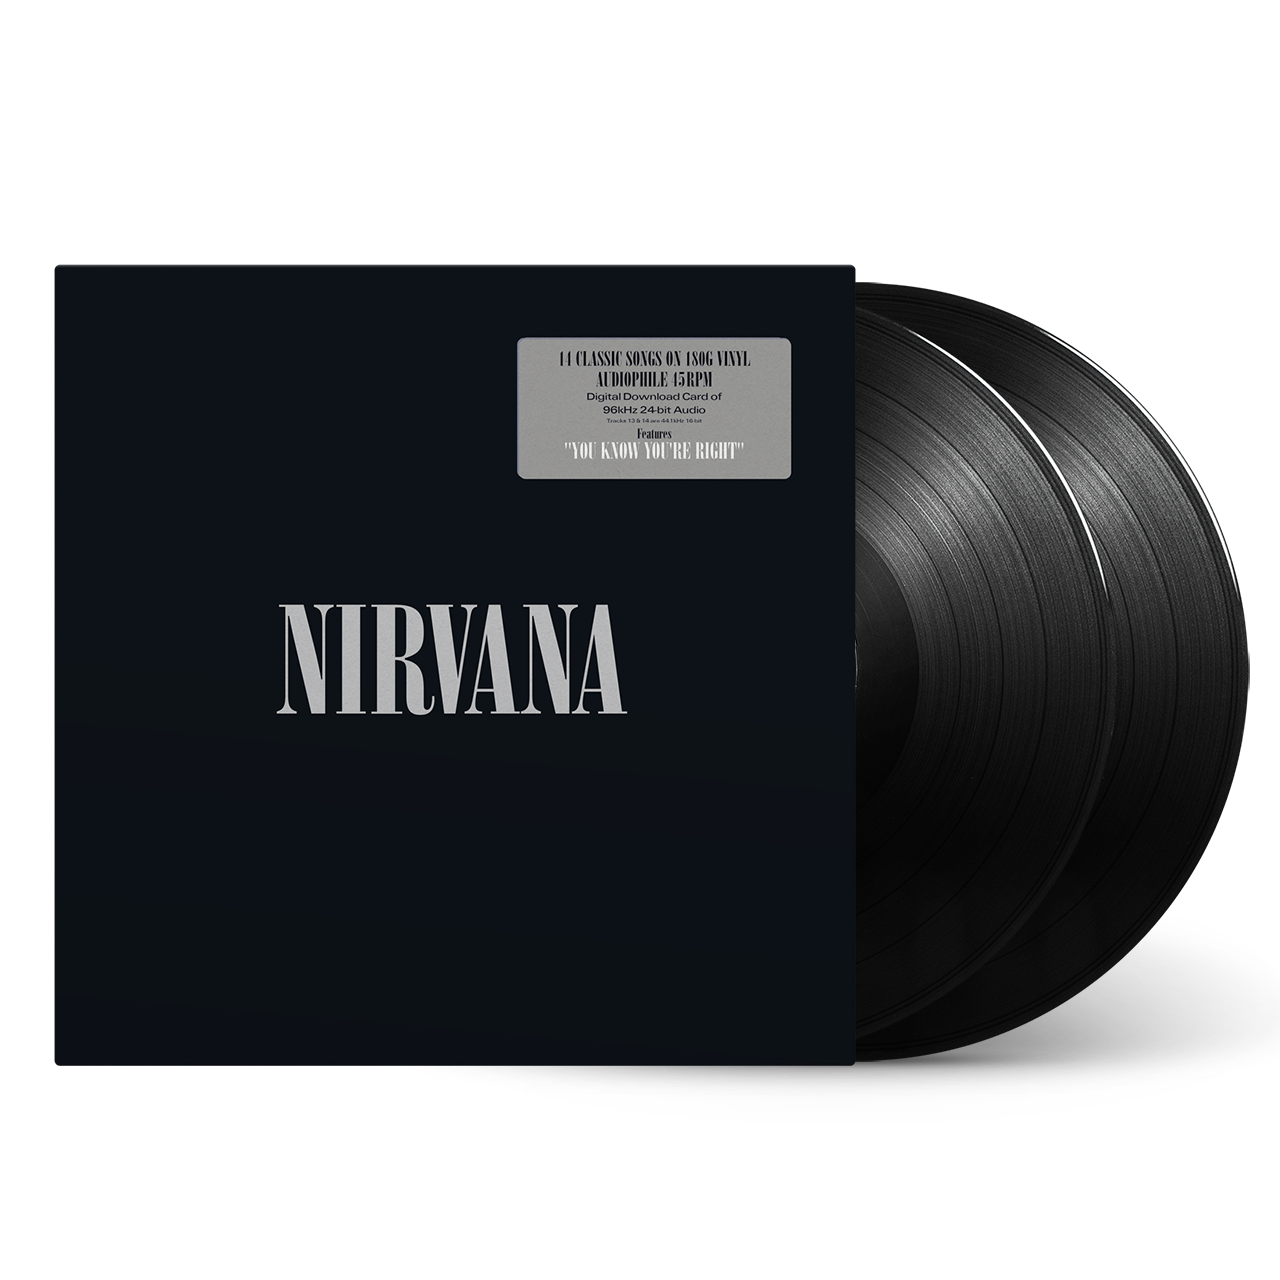 Nirvana - Nirvana: Deluxe Edition 45rpm Vinyl 2LP